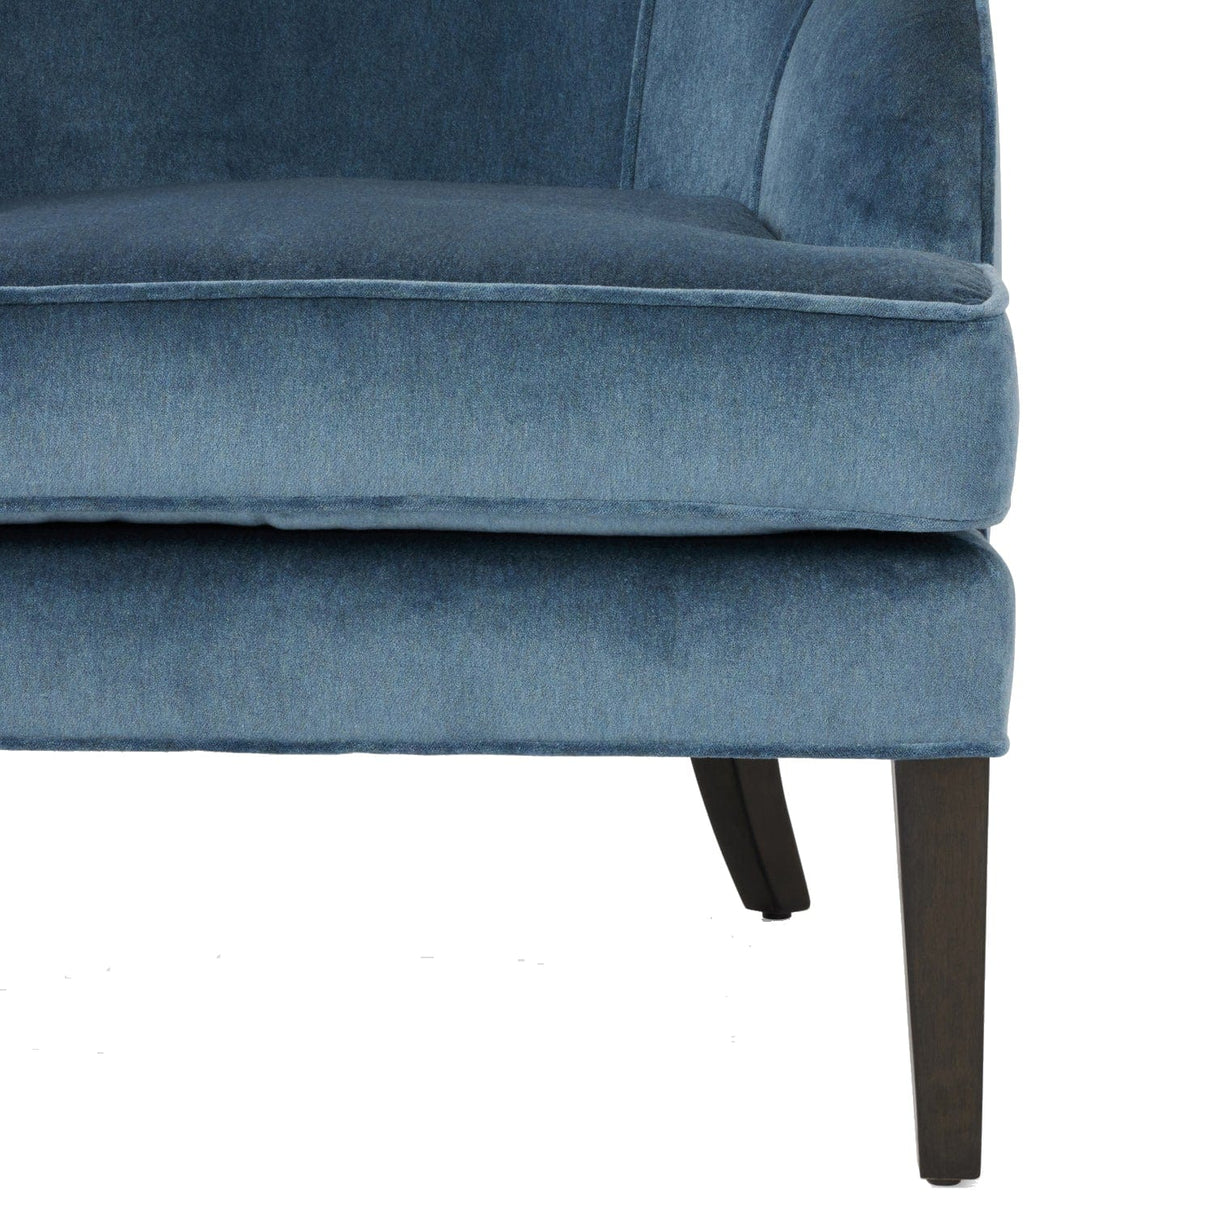 Made Goods Lario Chair Furniture made-goods-FURLARIOLOGYAR-DKTL